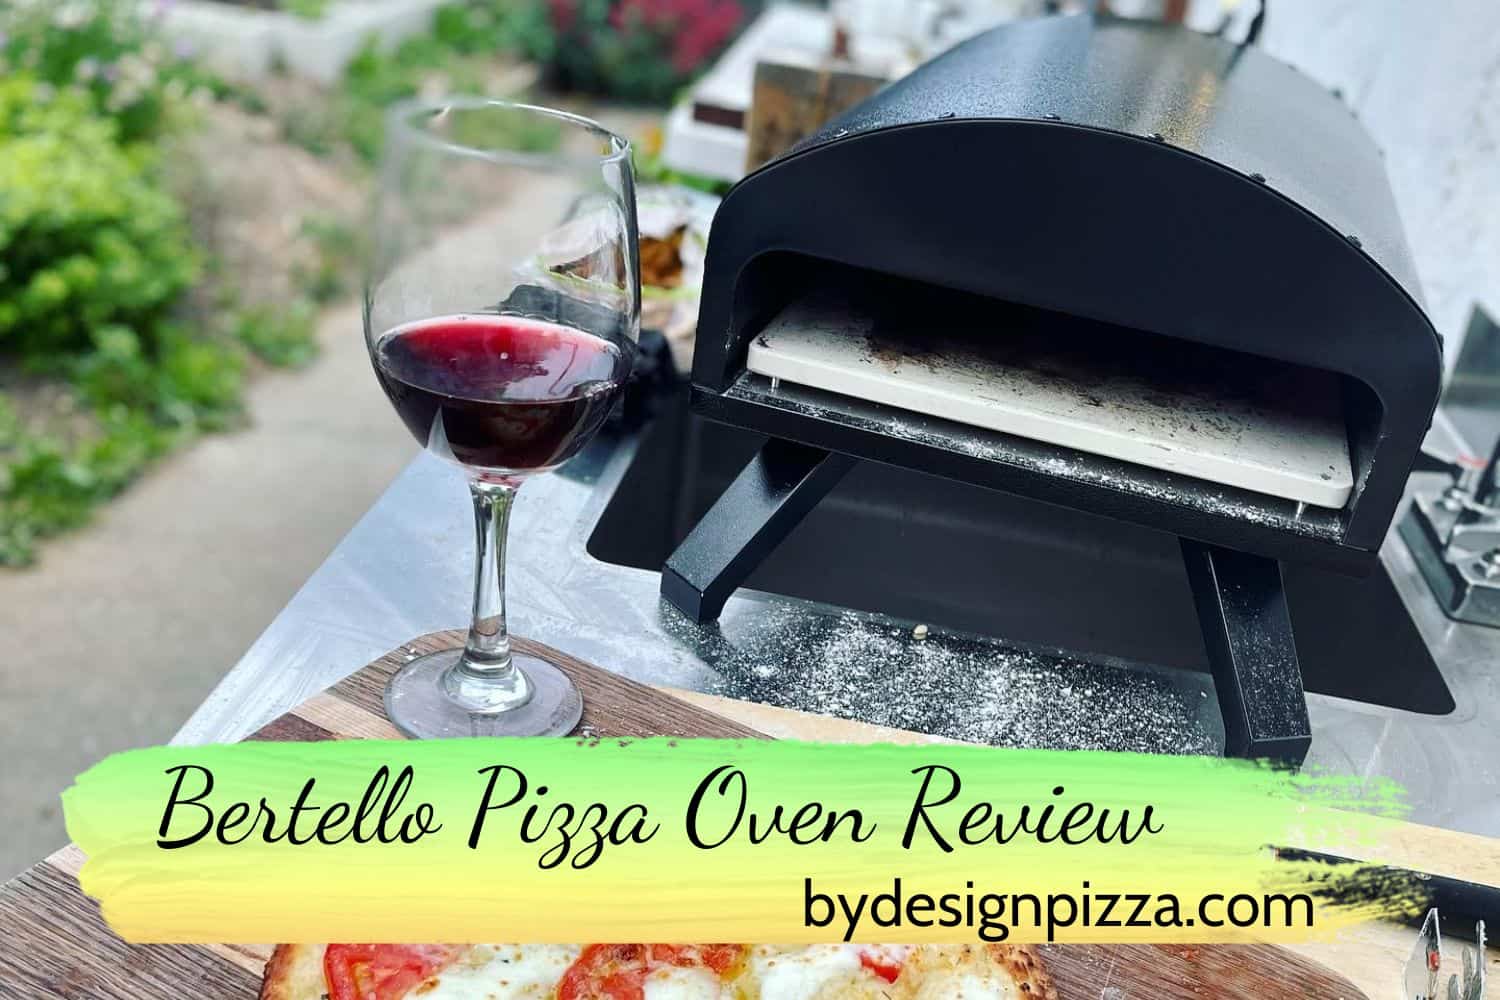 Bertello Pizza Oven Review